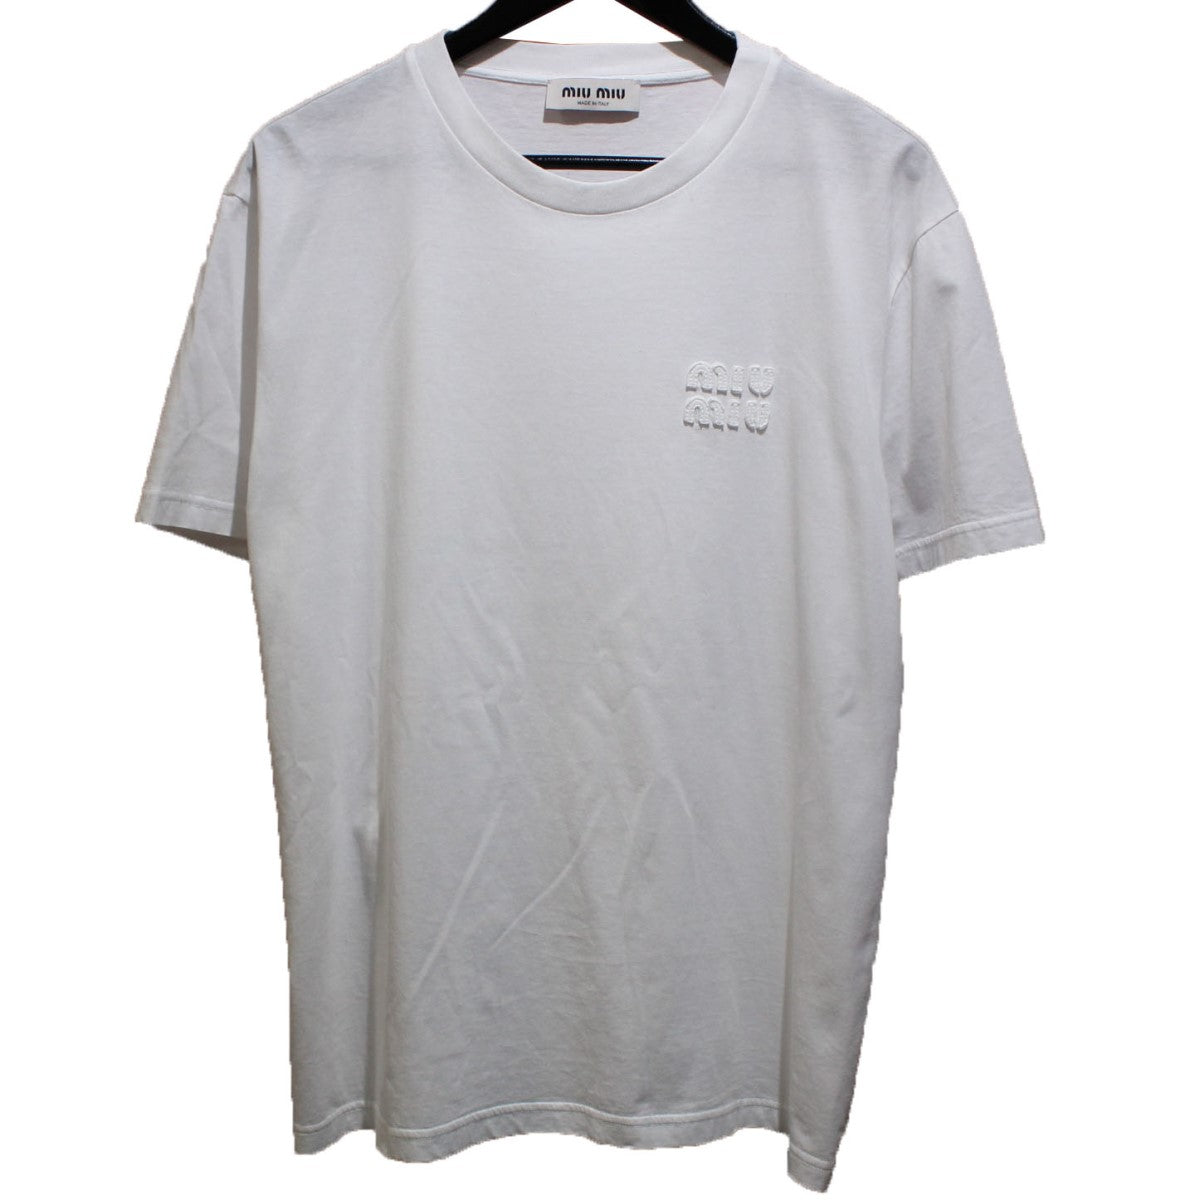 miu miu(ミュウミュウ) 刺繍 ジャージーTシャツ ロゴ クルーネック 半袖 Tシャツ